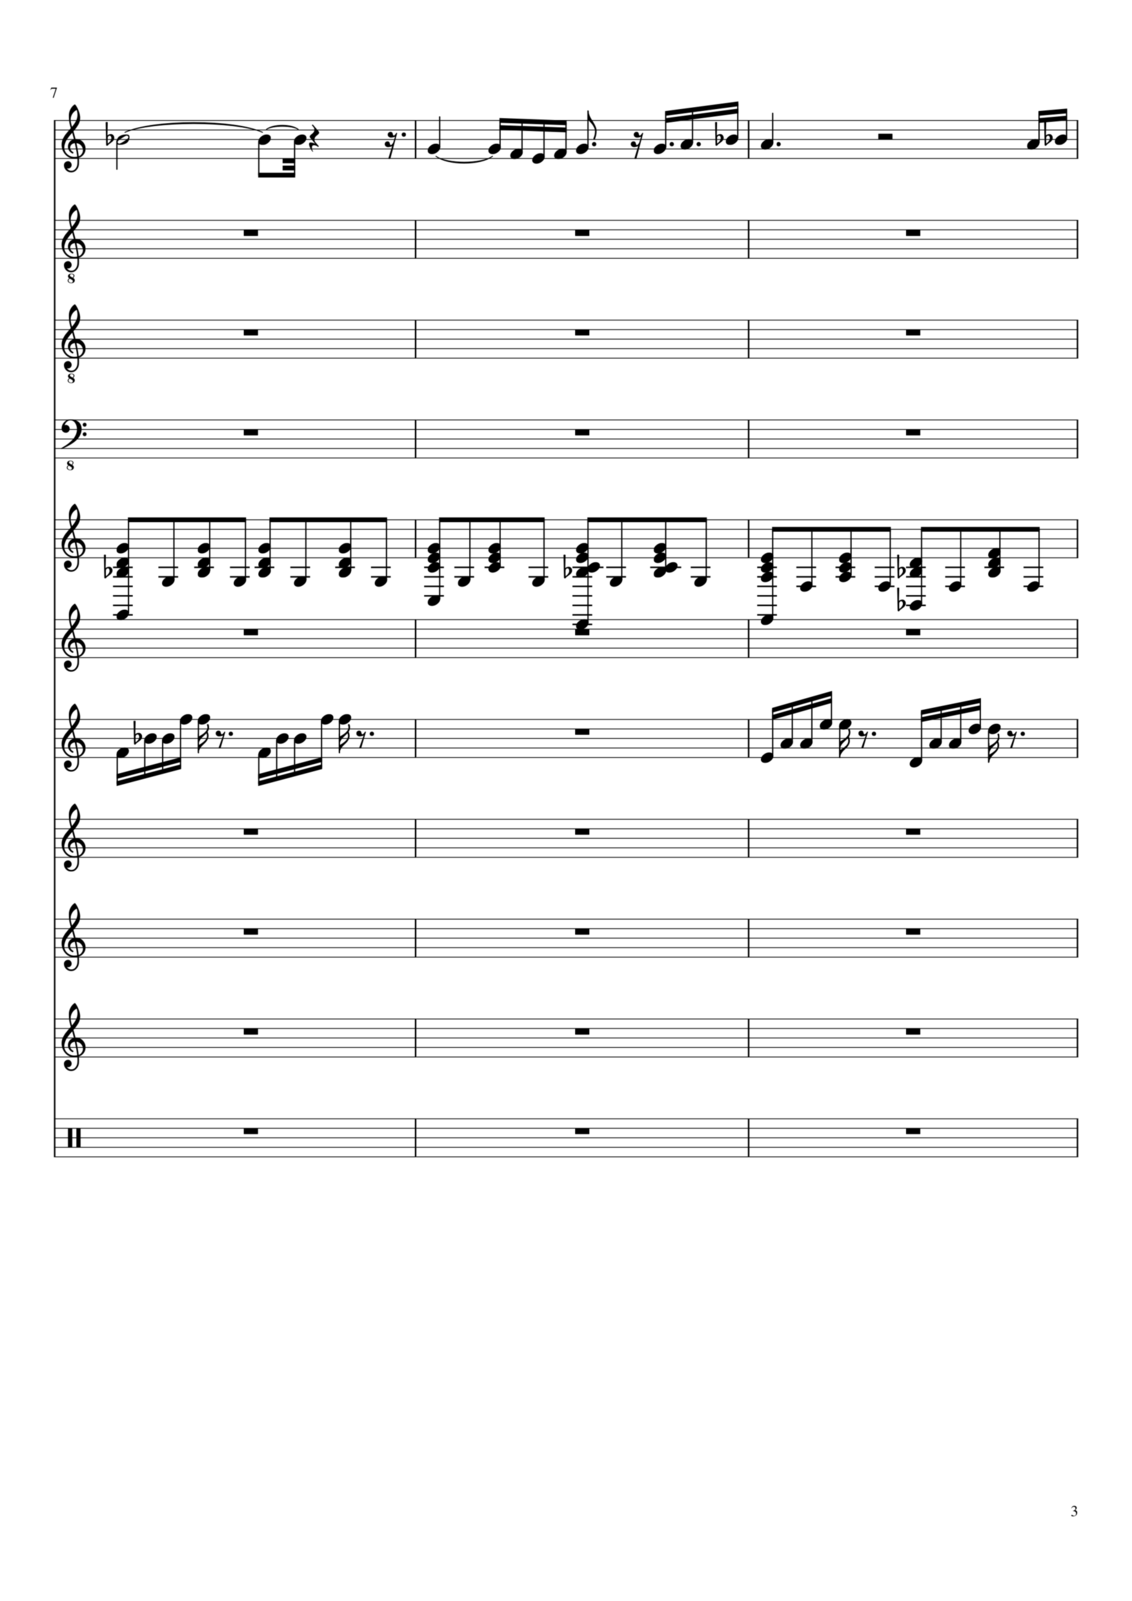 Gorod, kotorogo net slide, Image 3